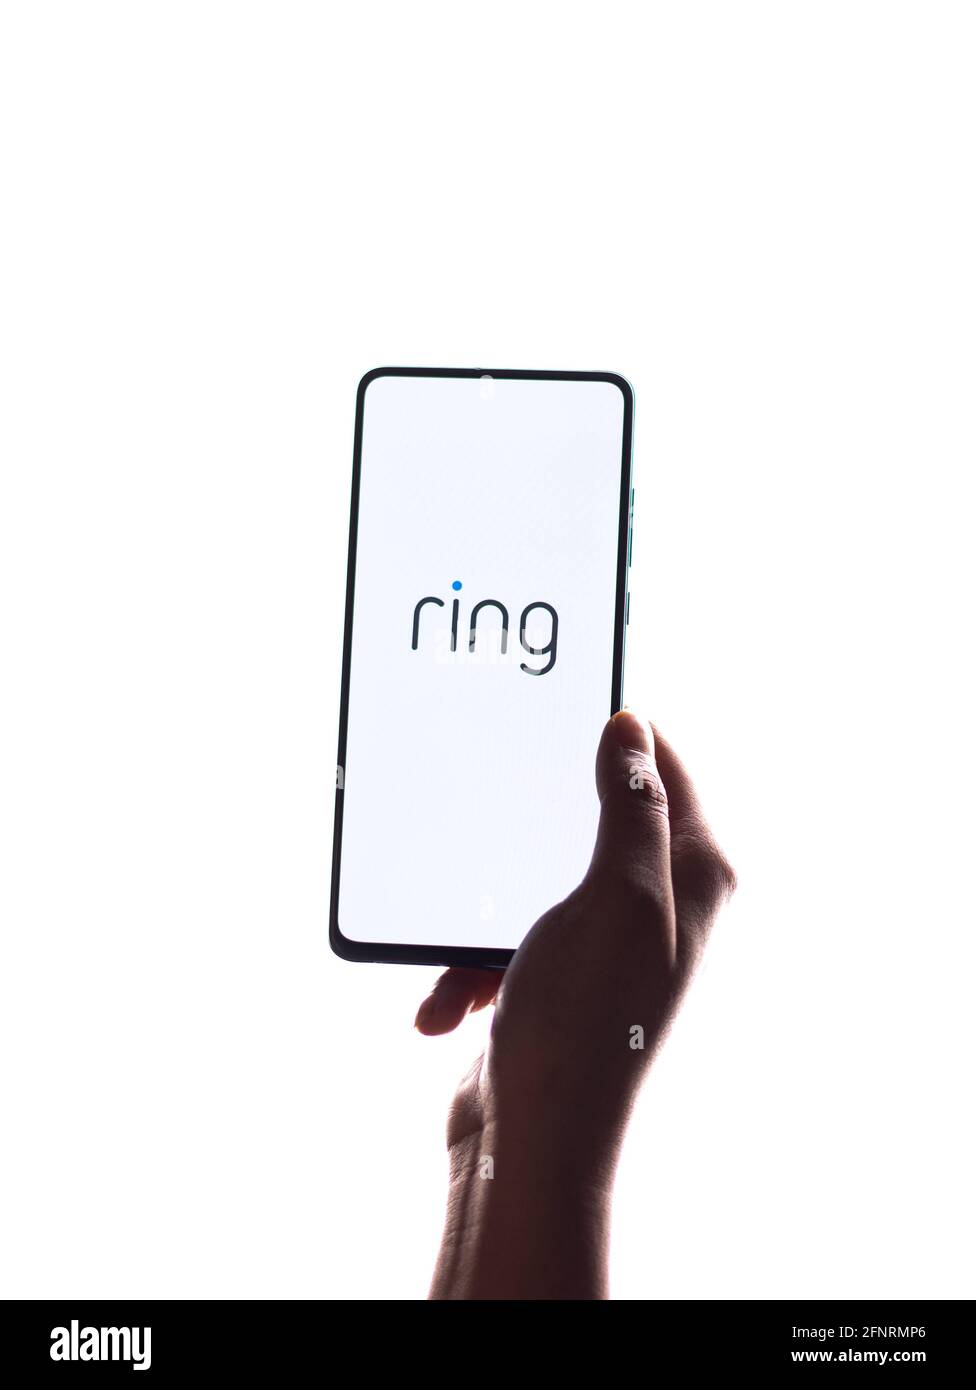 Assam, india - May 18, 2021 : Ring logo on phone screen stock image. Stock Photo